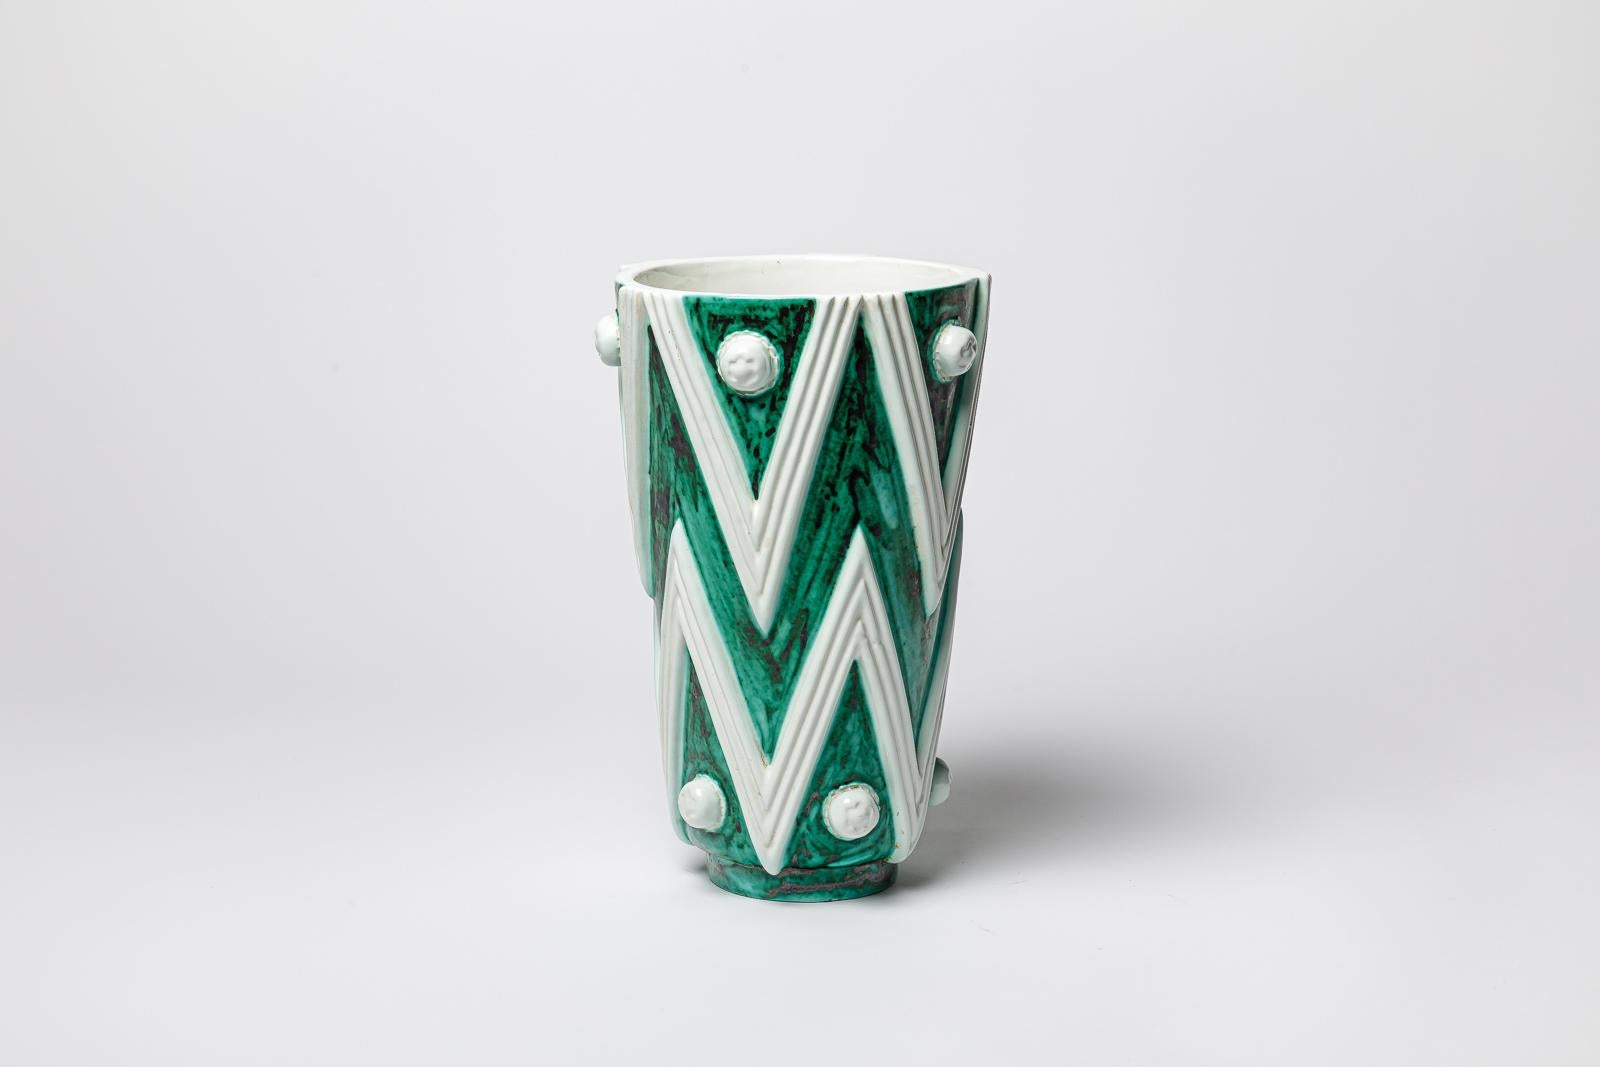 Green and white glazed ceramic vase by Sainte Radegonde. 
Artist monogram under the base. Circa 1960-1970.
H : 11.02’ x 6.7’ inches.